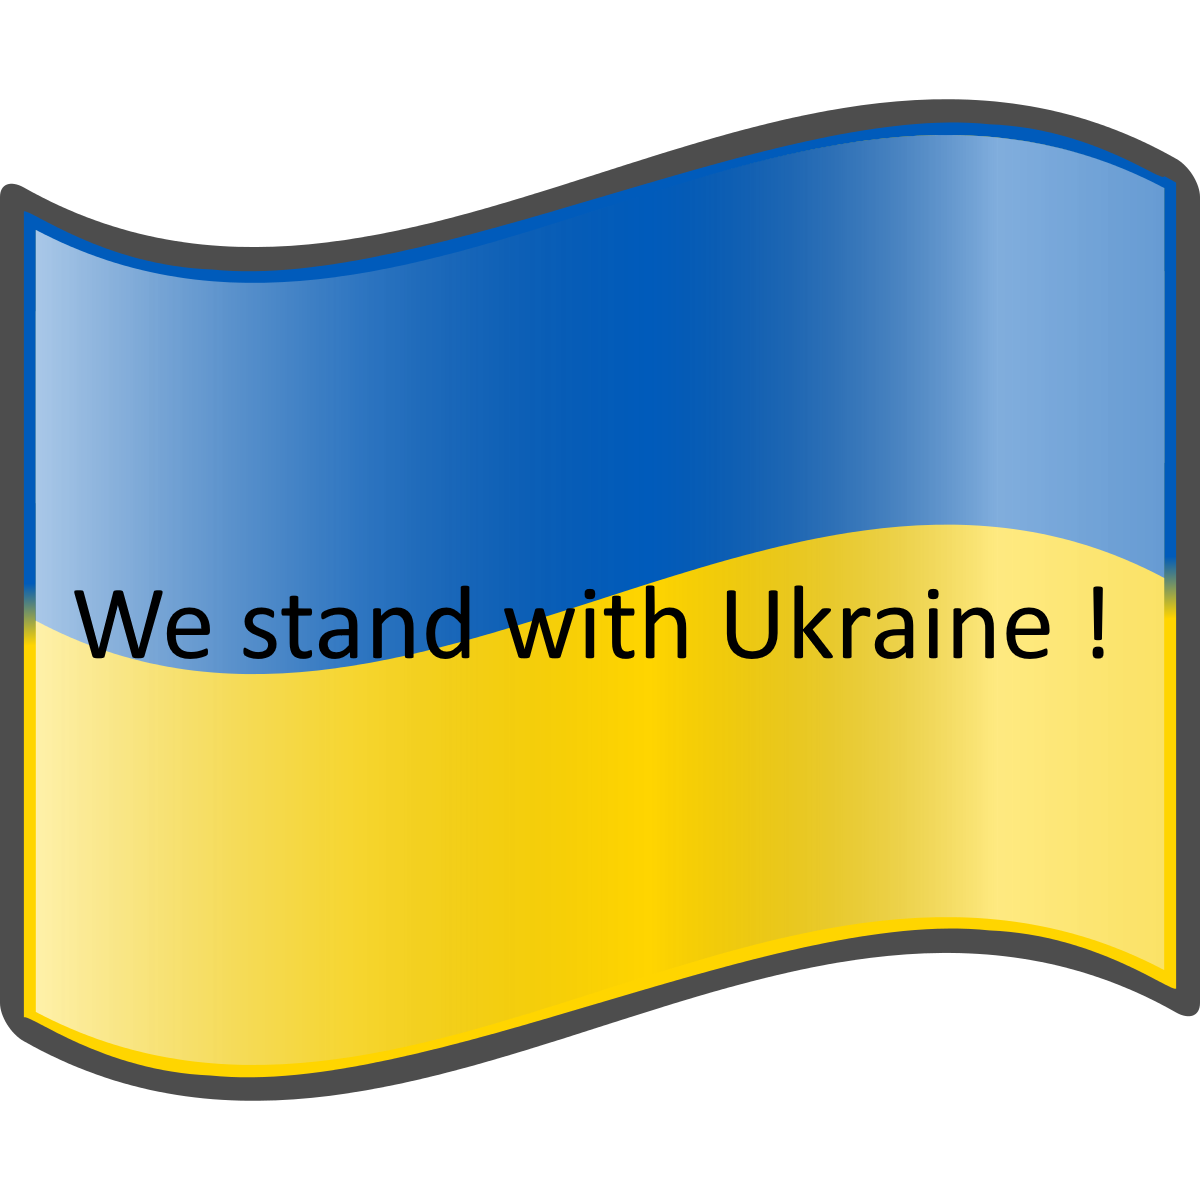 We stay with Ukraine